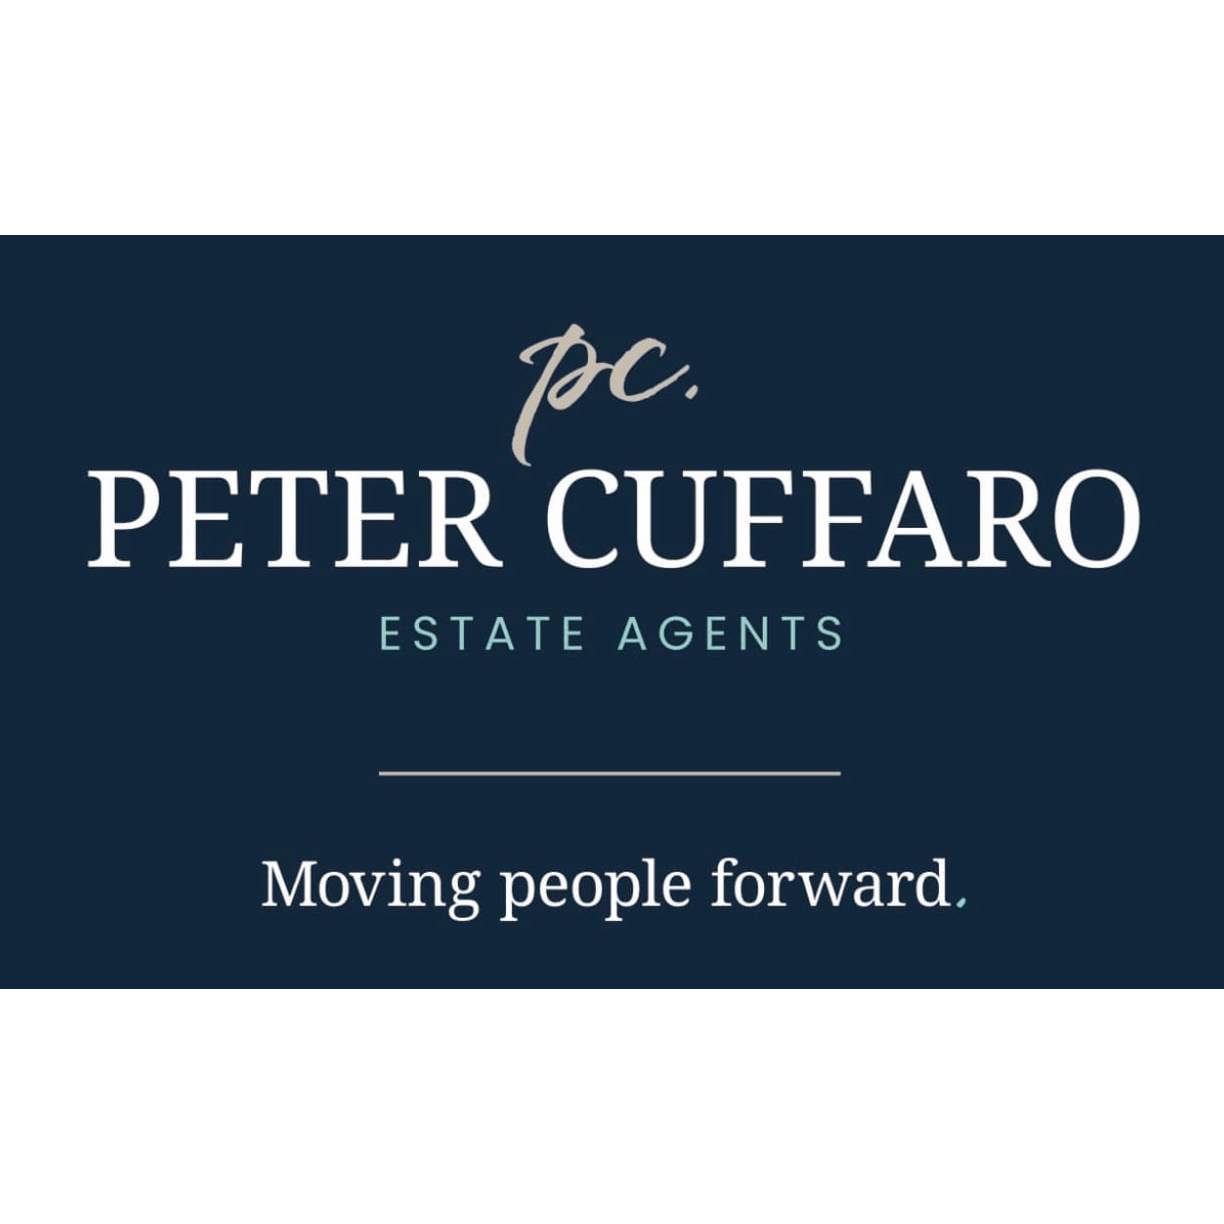 Peter Cuffaro Estate Agents - Ware, Hertfordshire SG12 8AA - 01920 633333 | ShowMeLocal.com